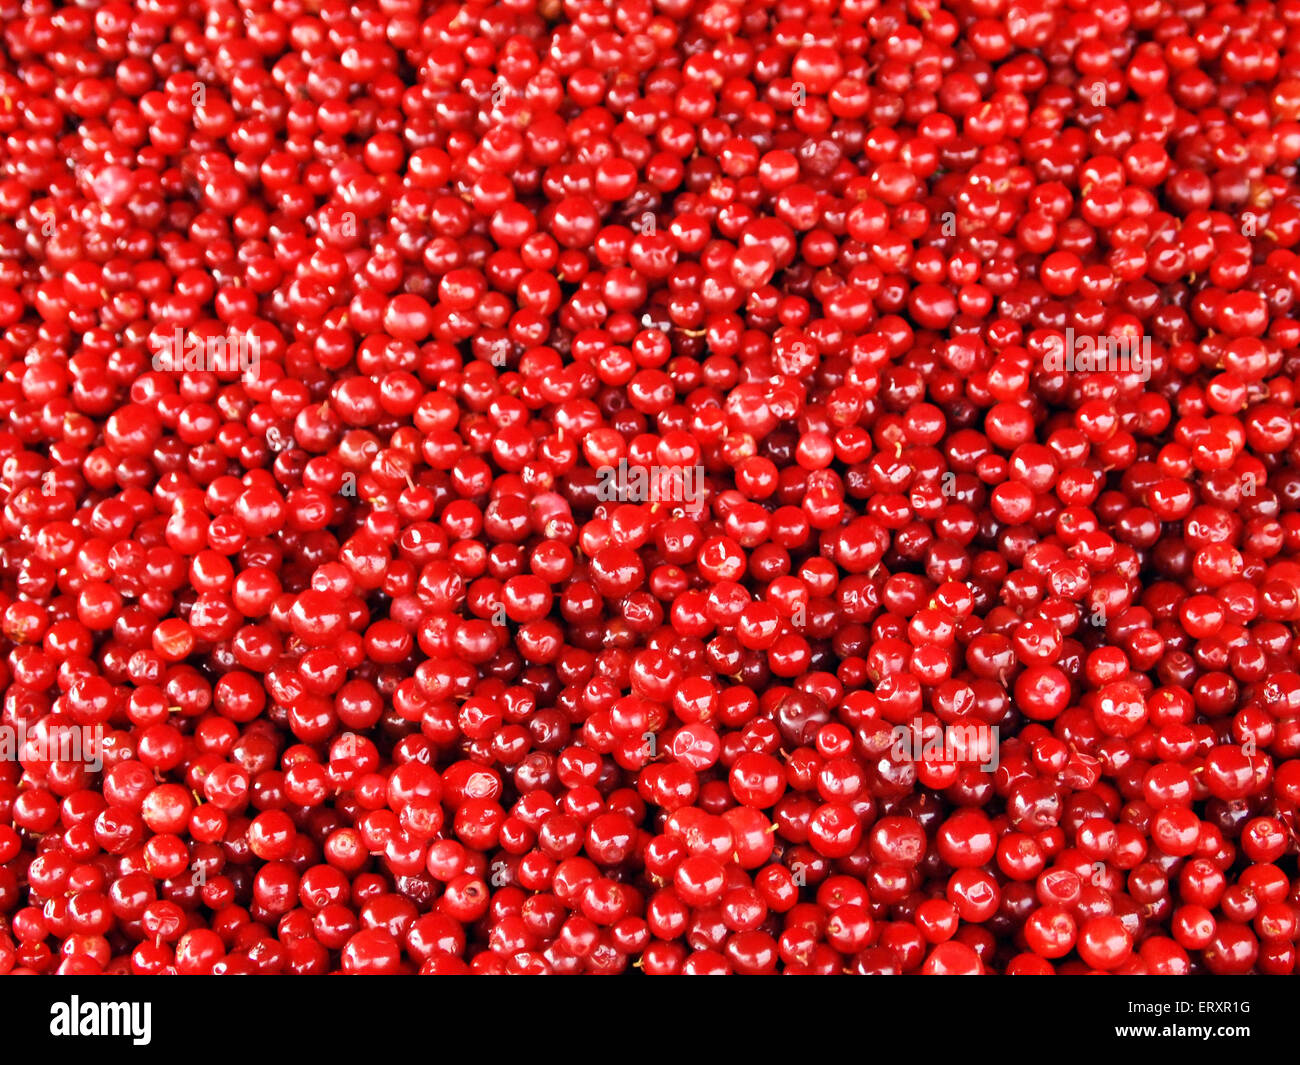 Lingonberries in large quantities Stock Photo